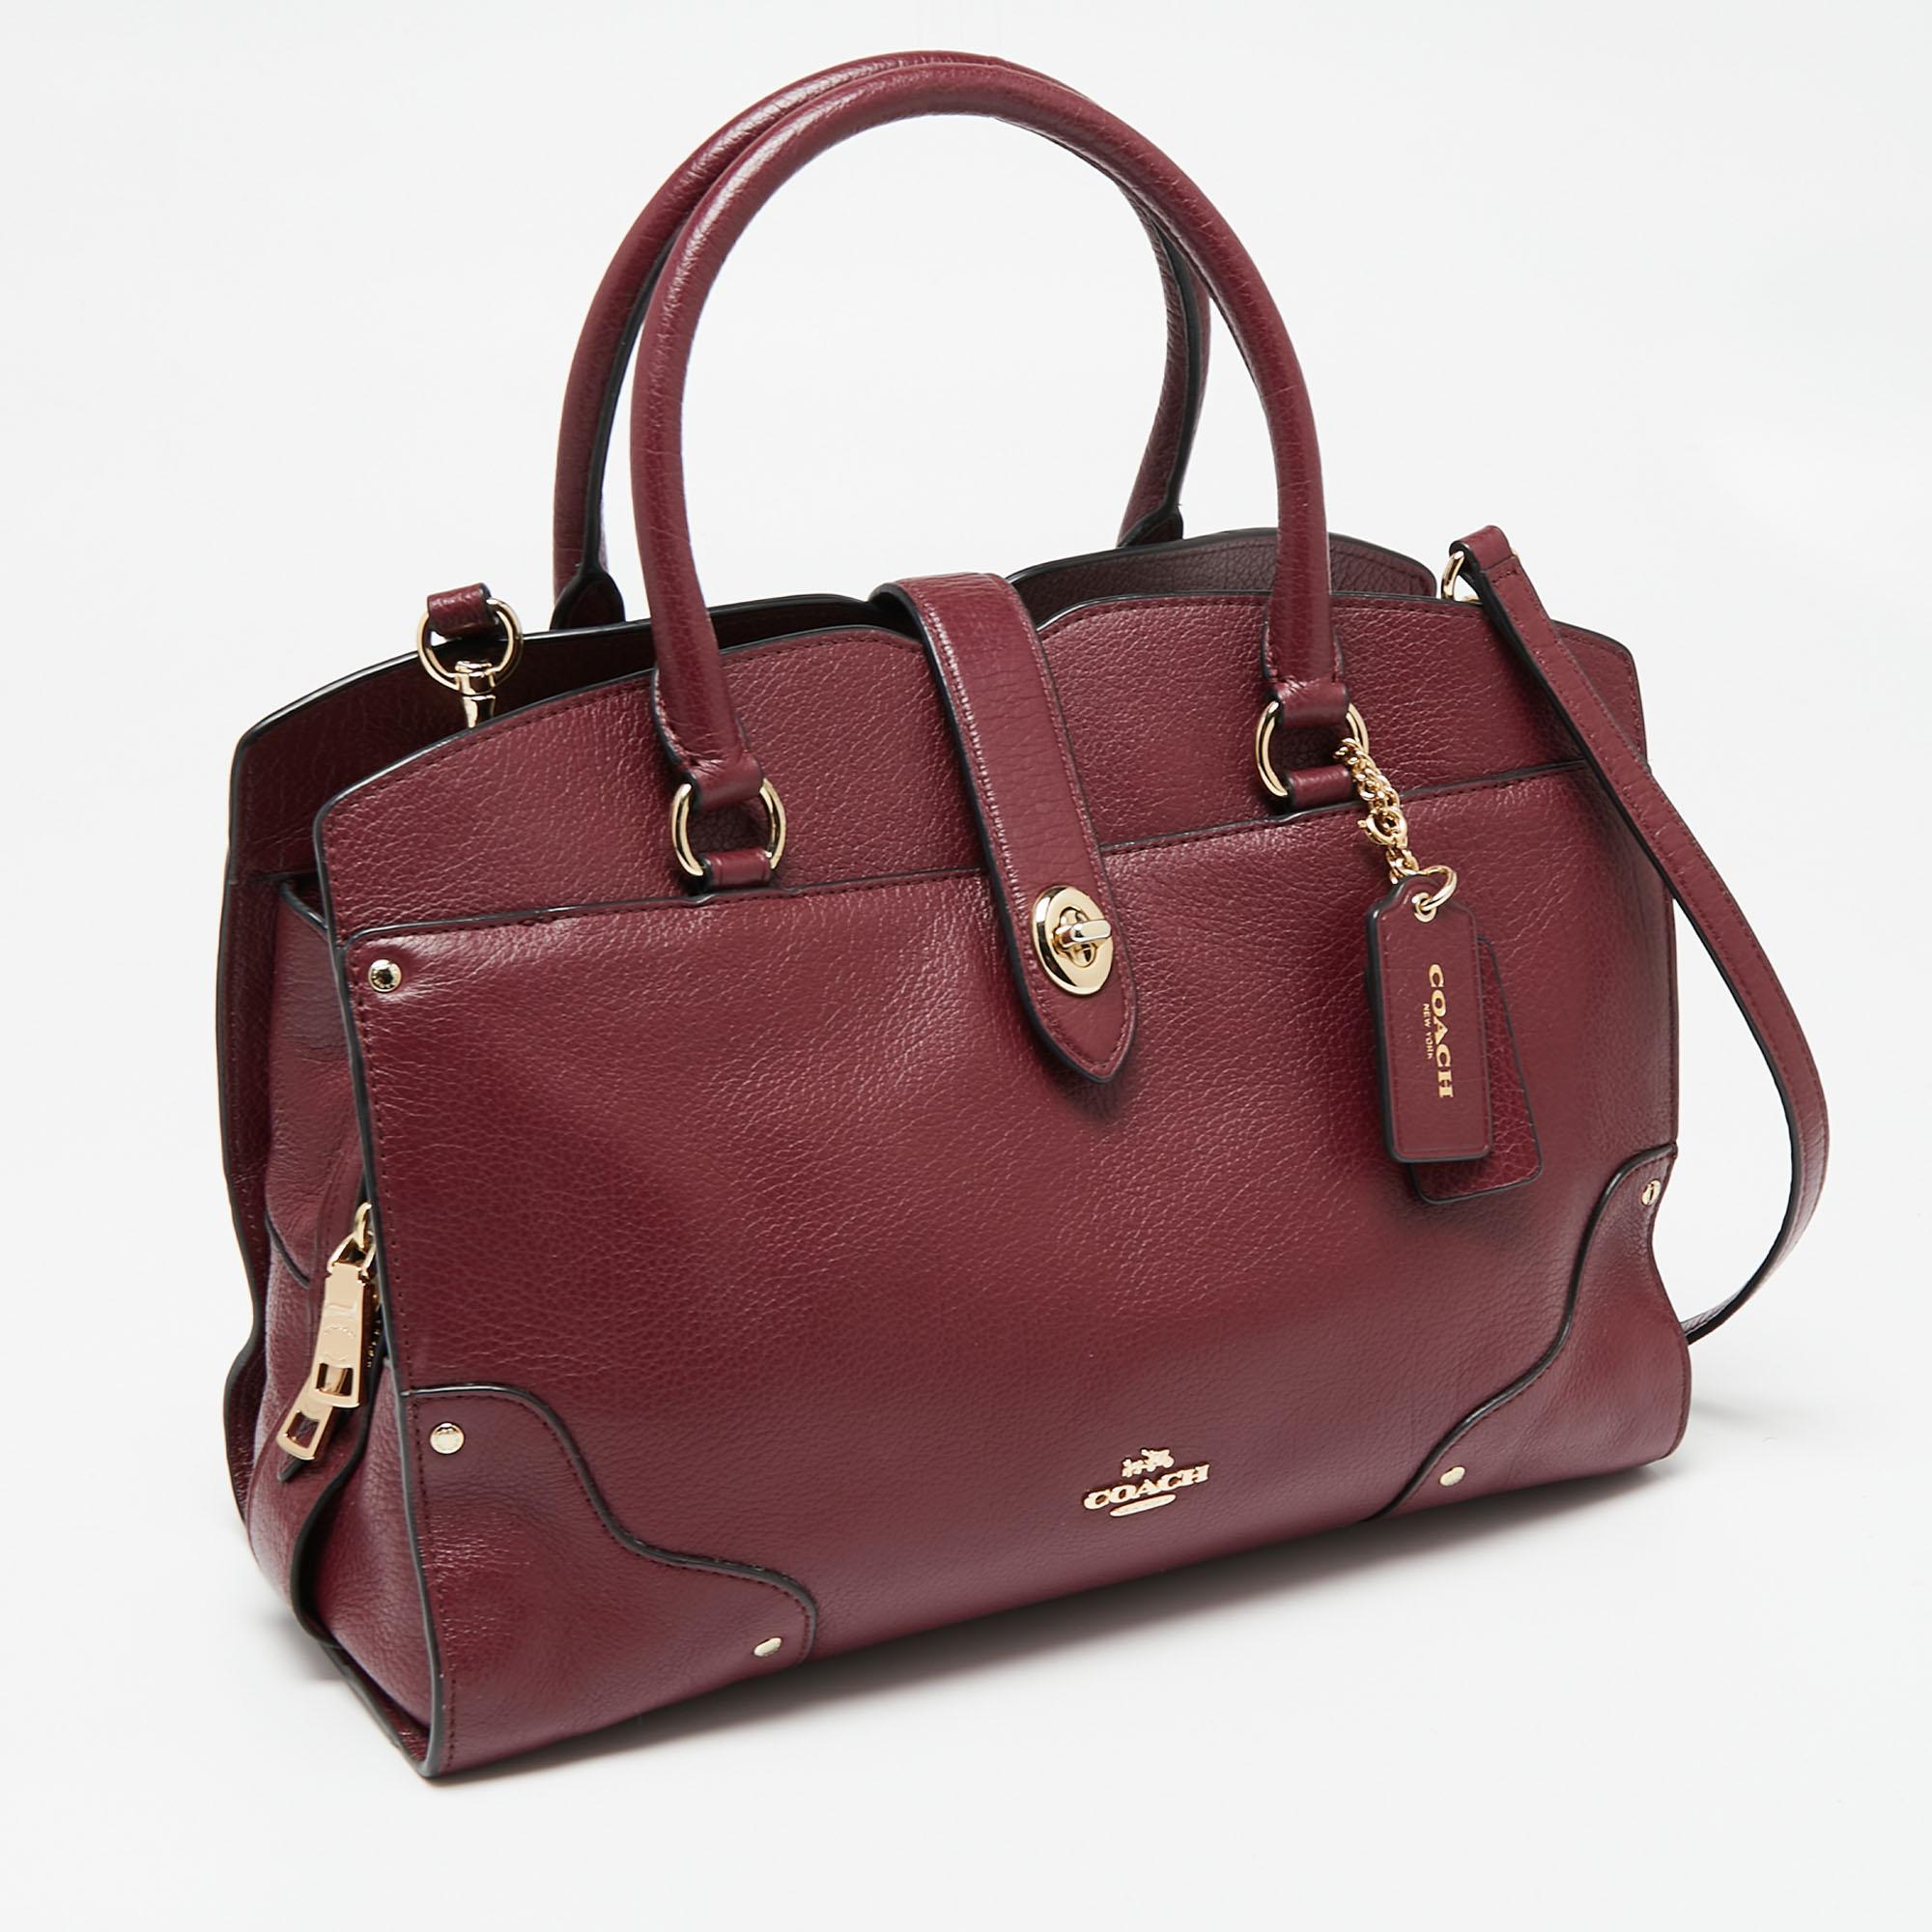 burgundy satchel